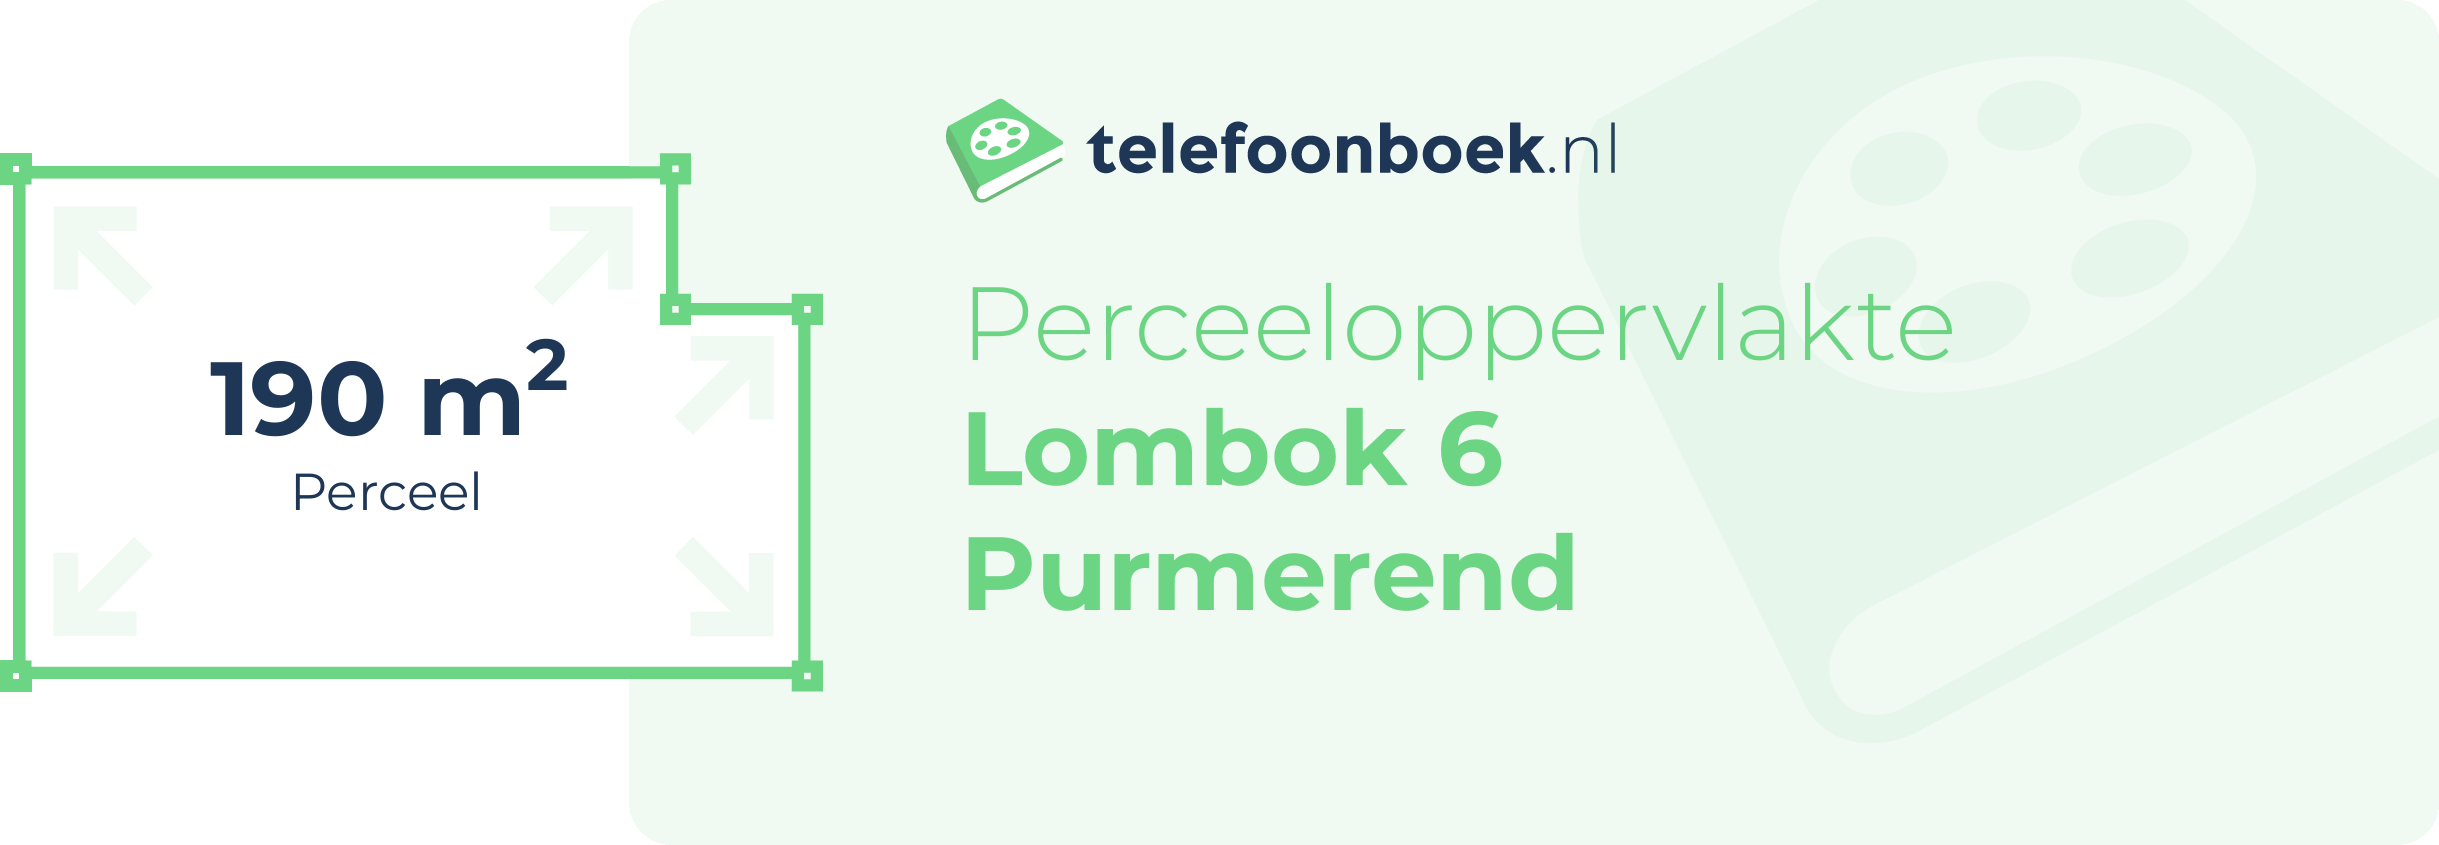 Perceeloppervlakte Lombok 6 Purmerend